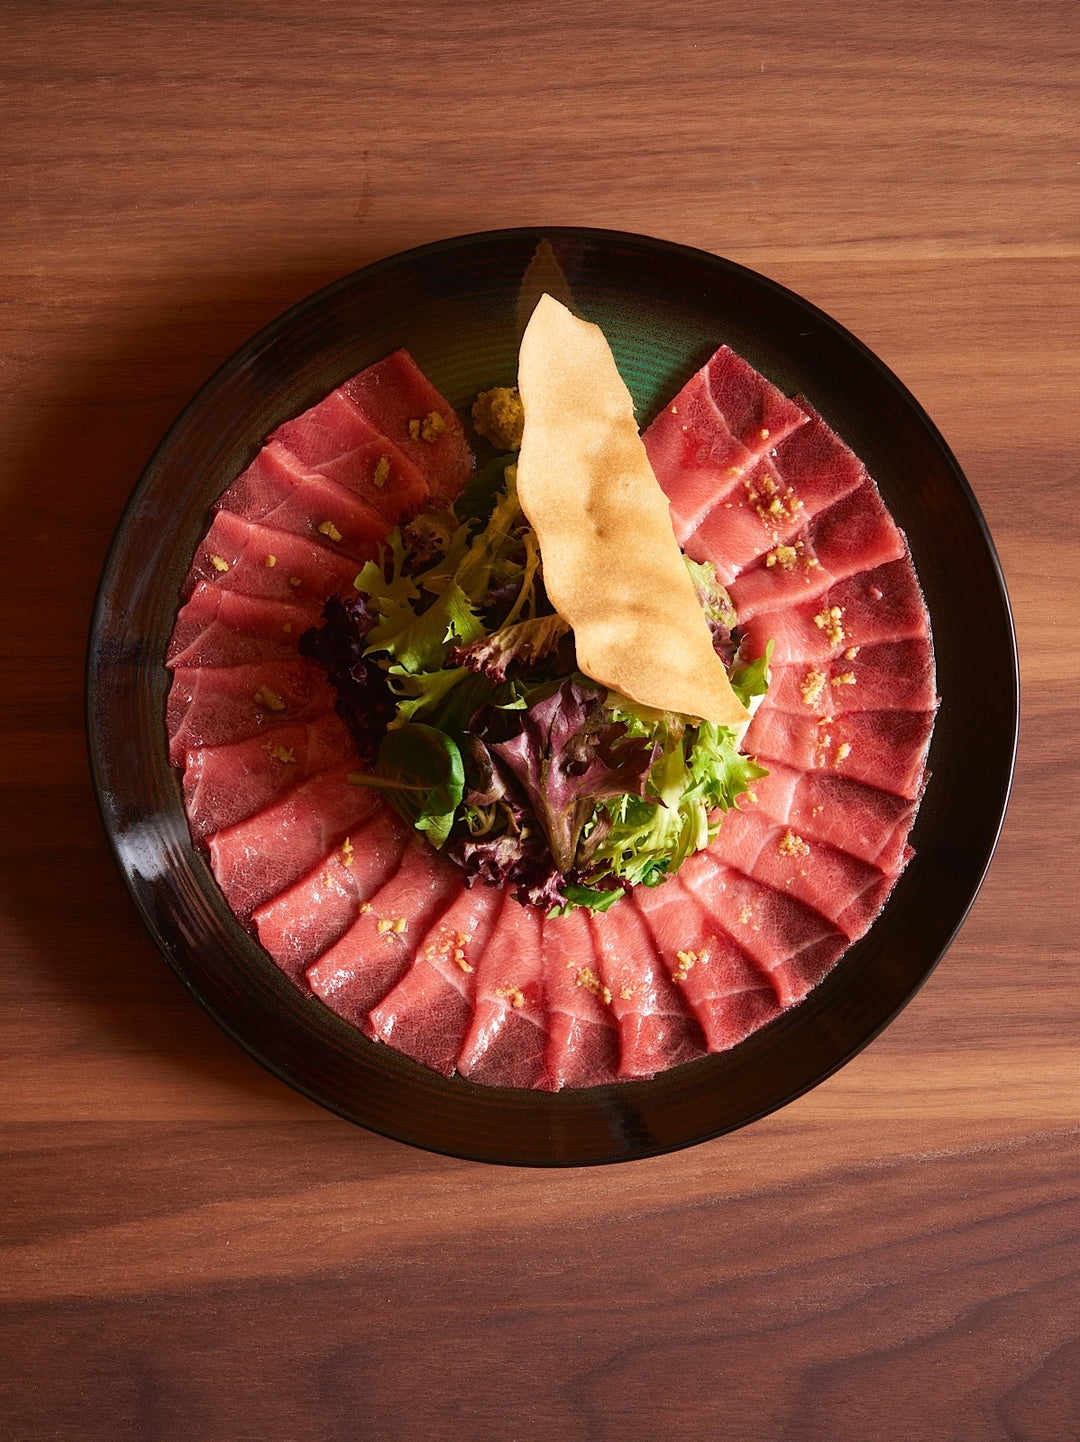 Tuna Sashimi Salad with Greens and Sweetened Vinegar | LKF Concepts